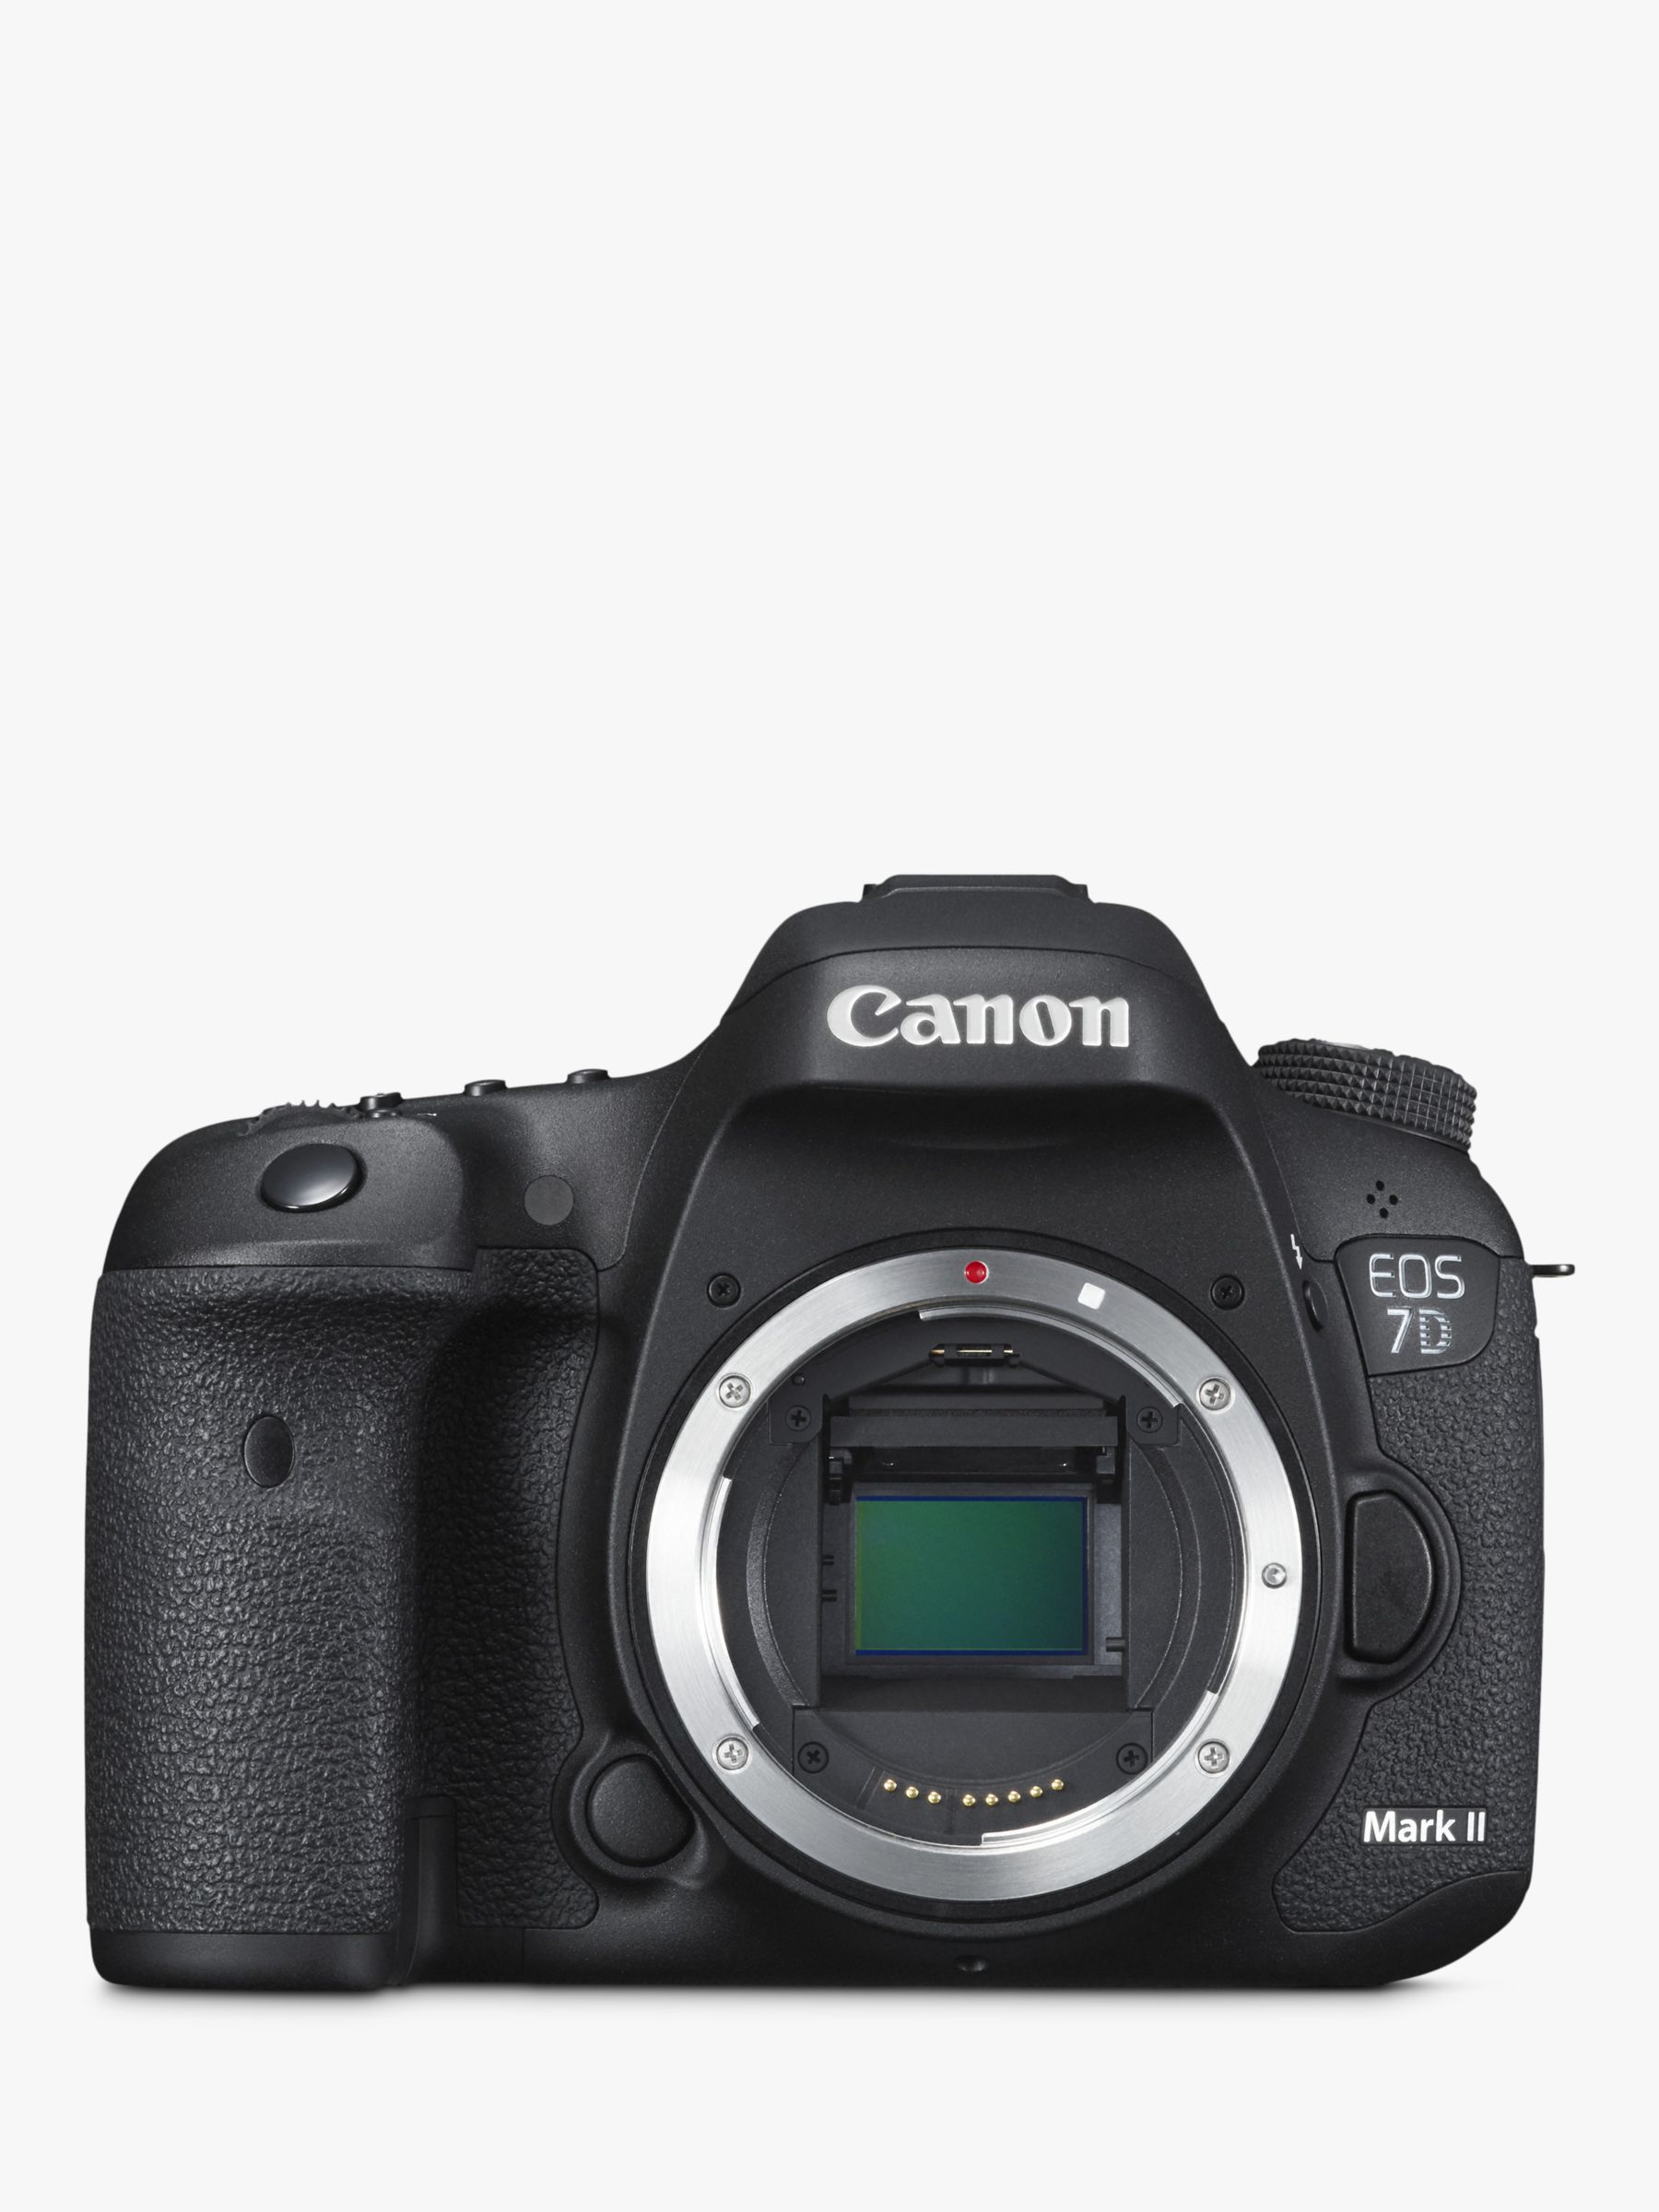 Canon EOS 7D MK II Digital SLR Camera, HD 1080p, 20.2MP, 3" LCD Screen, Body Only